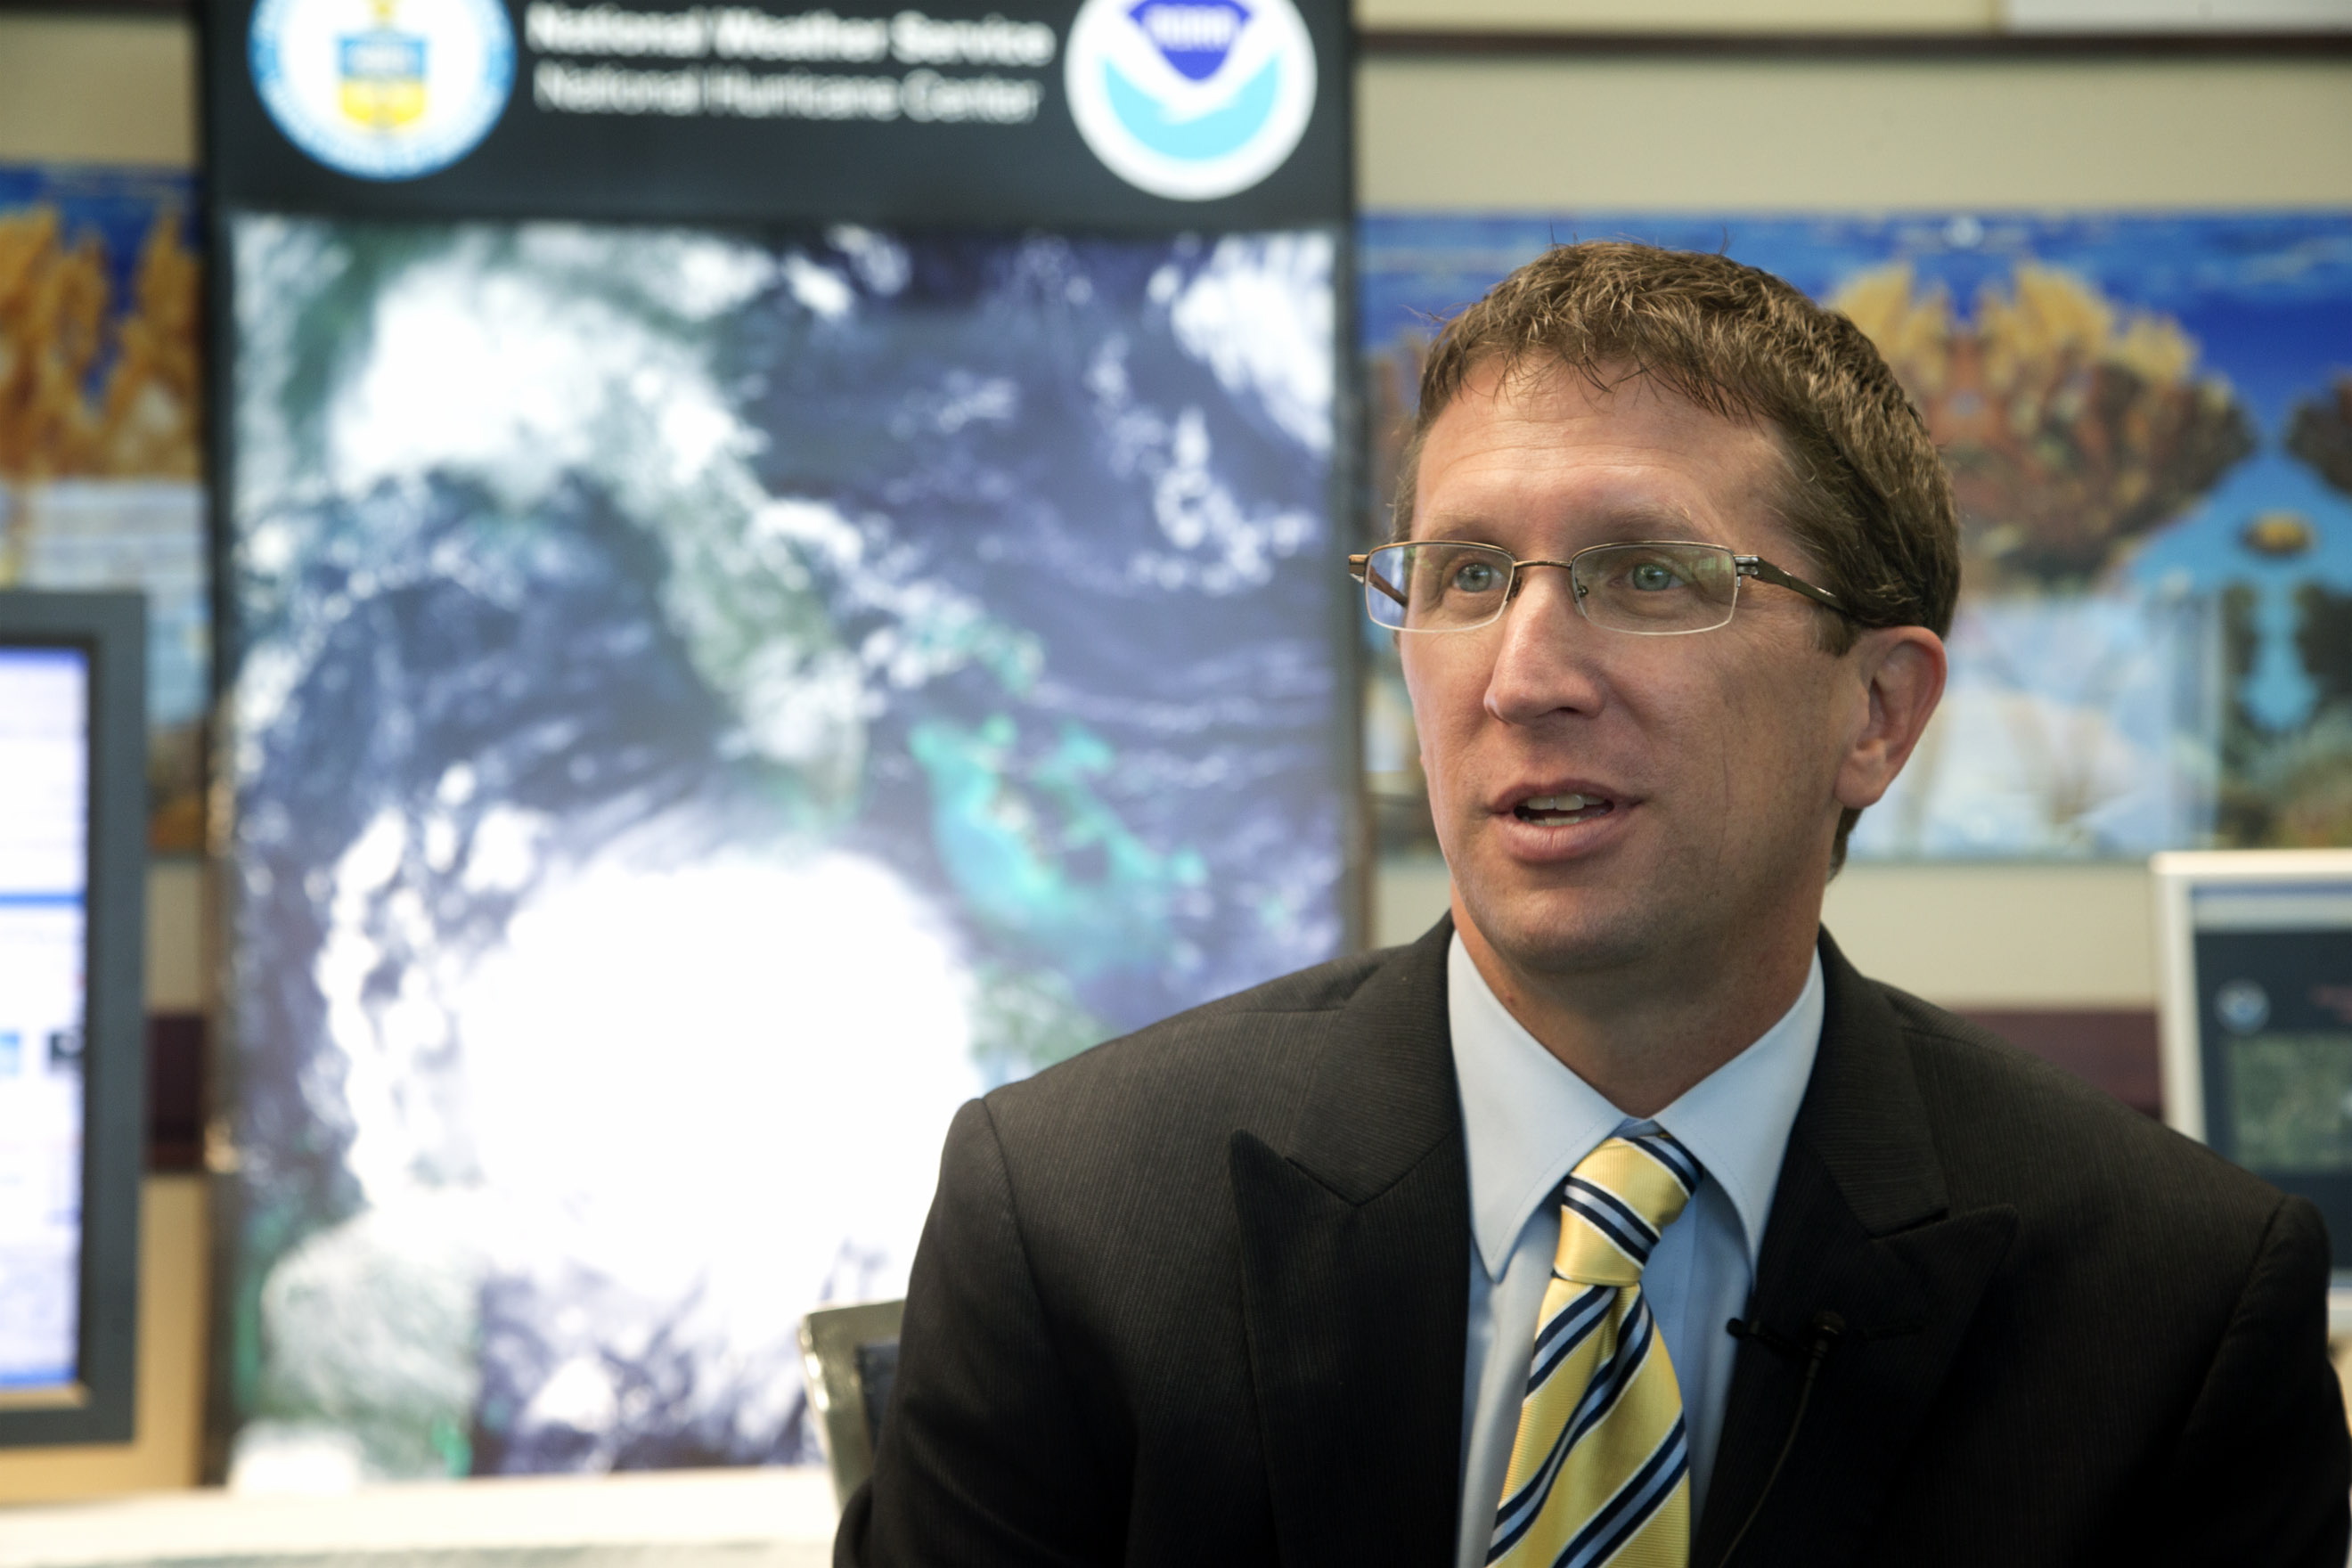 National Hurricane Center Director Rick Knabb